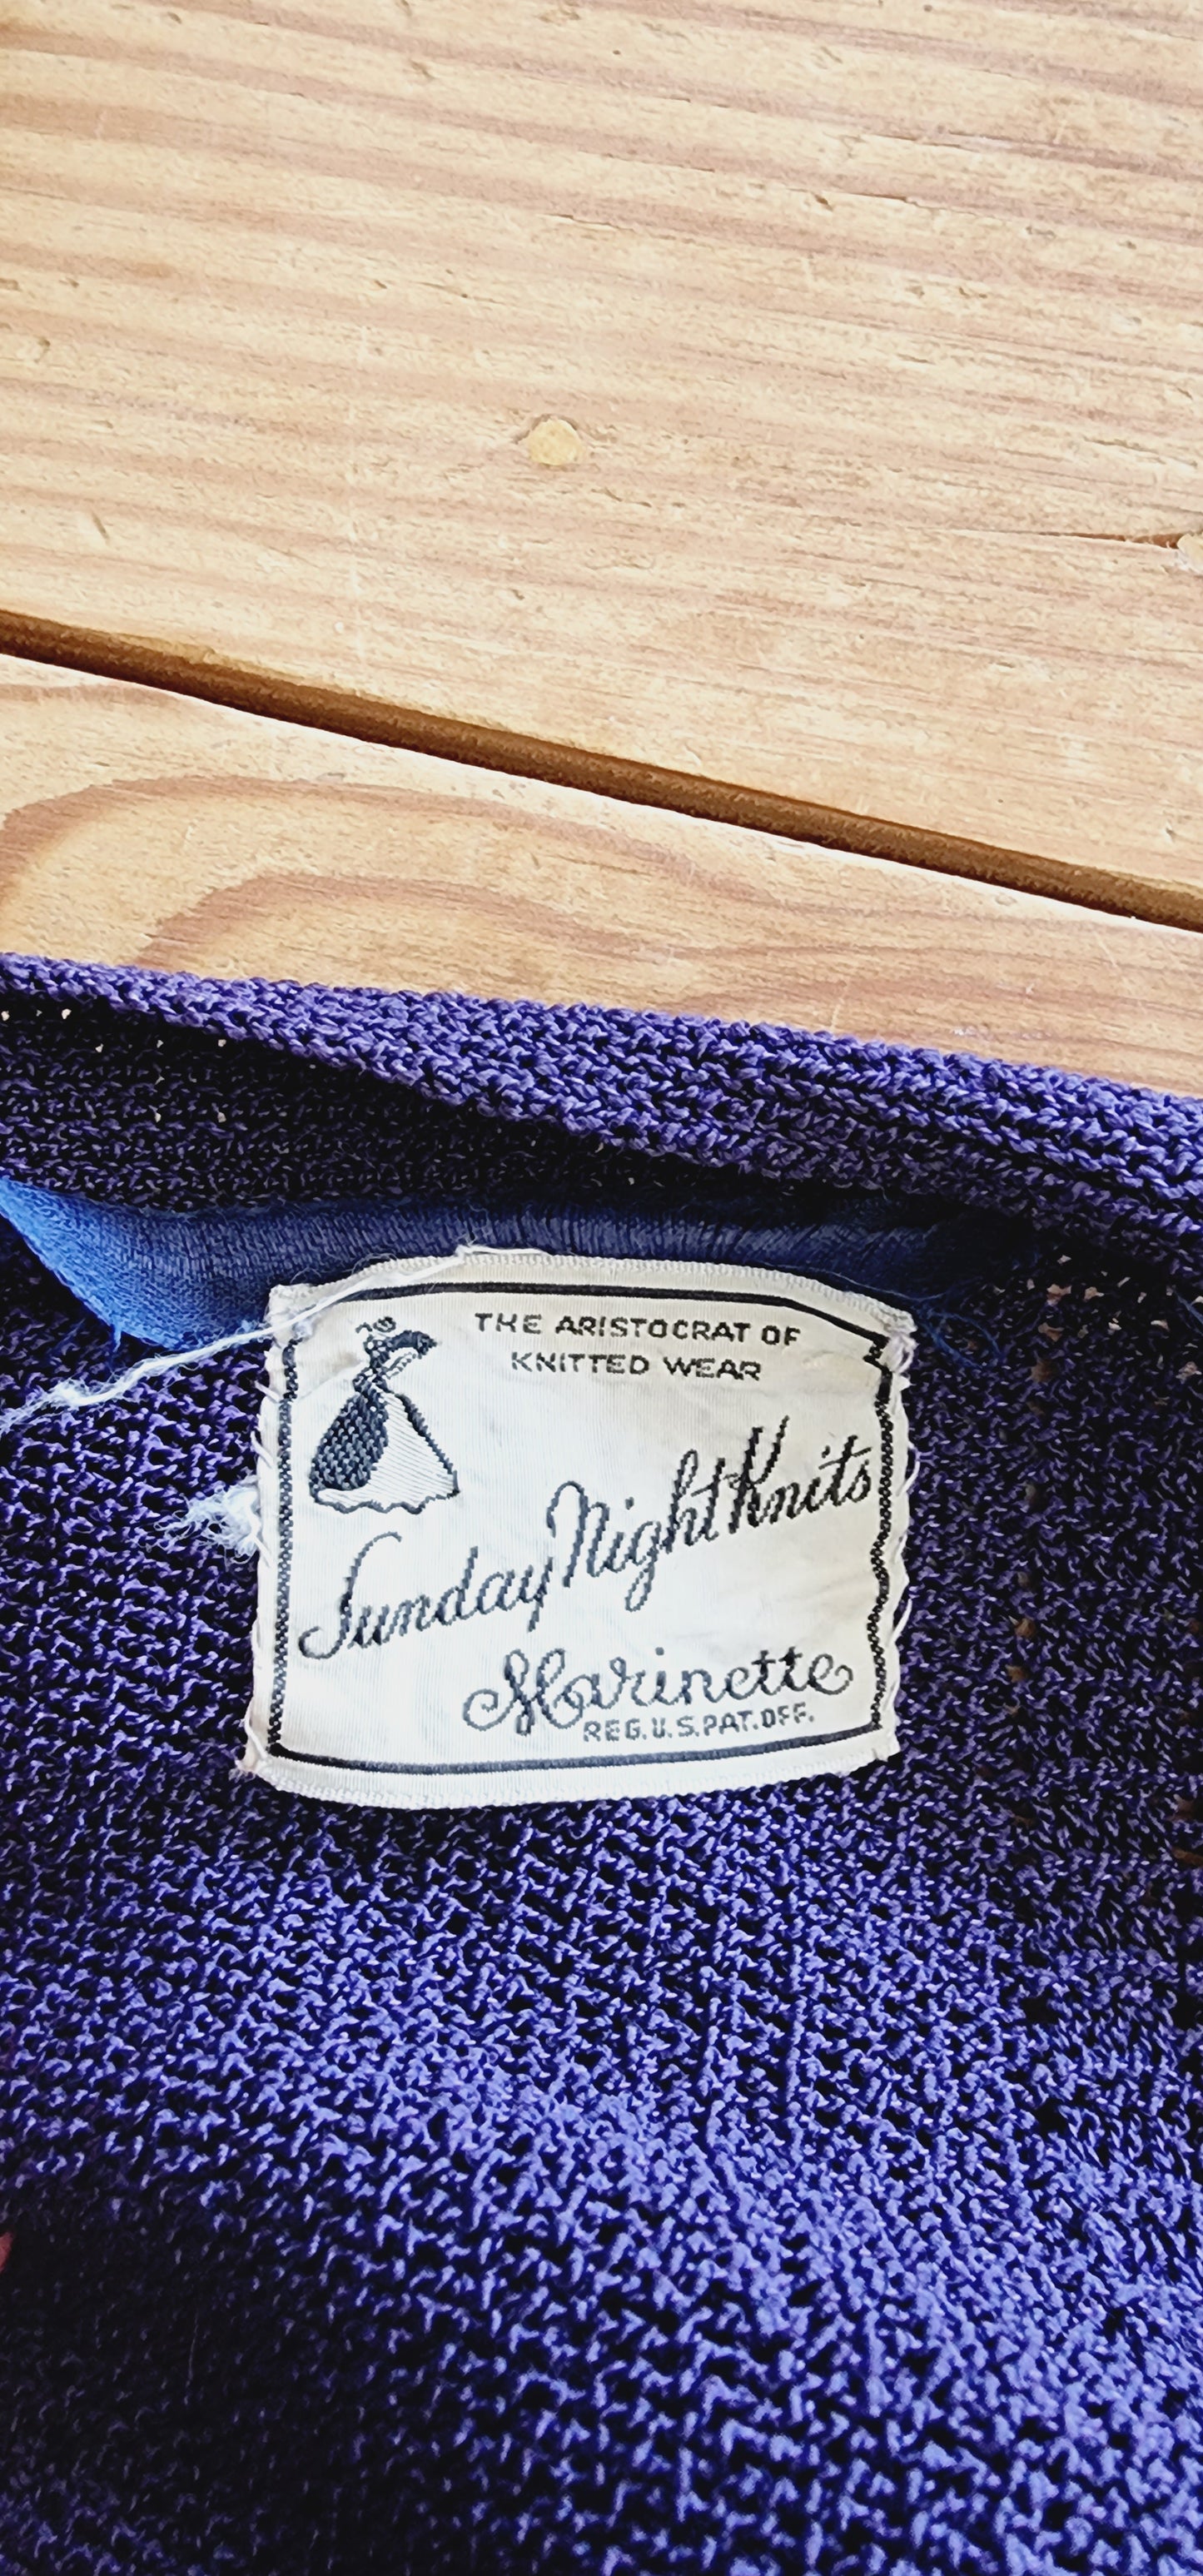 1930s Navy Blue Handknit Cardigan Sunday Night Knits by Marinette / S